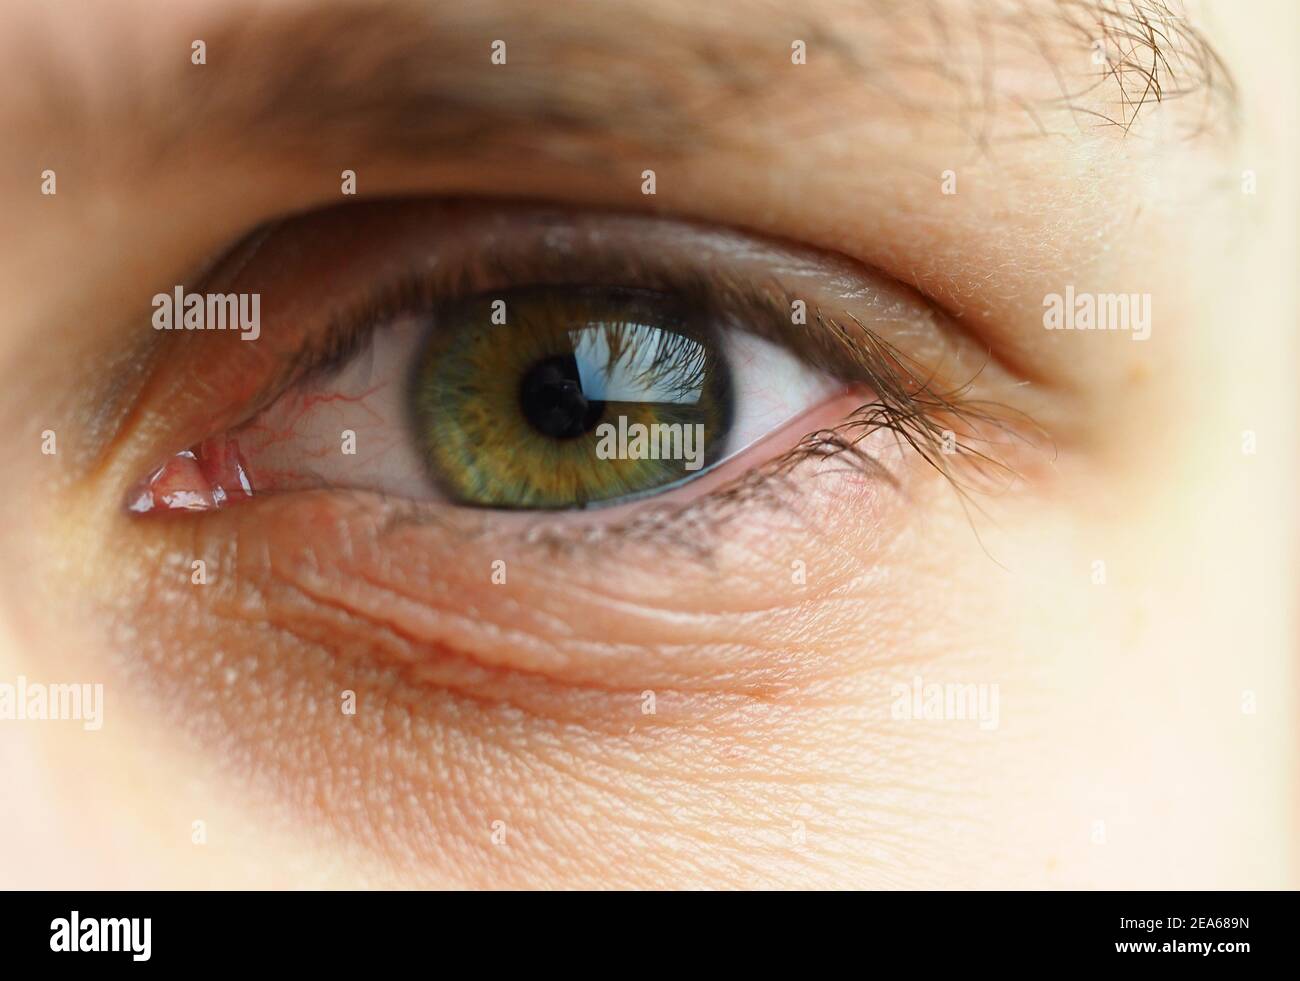 A man's eye. Macrophotography of the human eye. Stock Photo